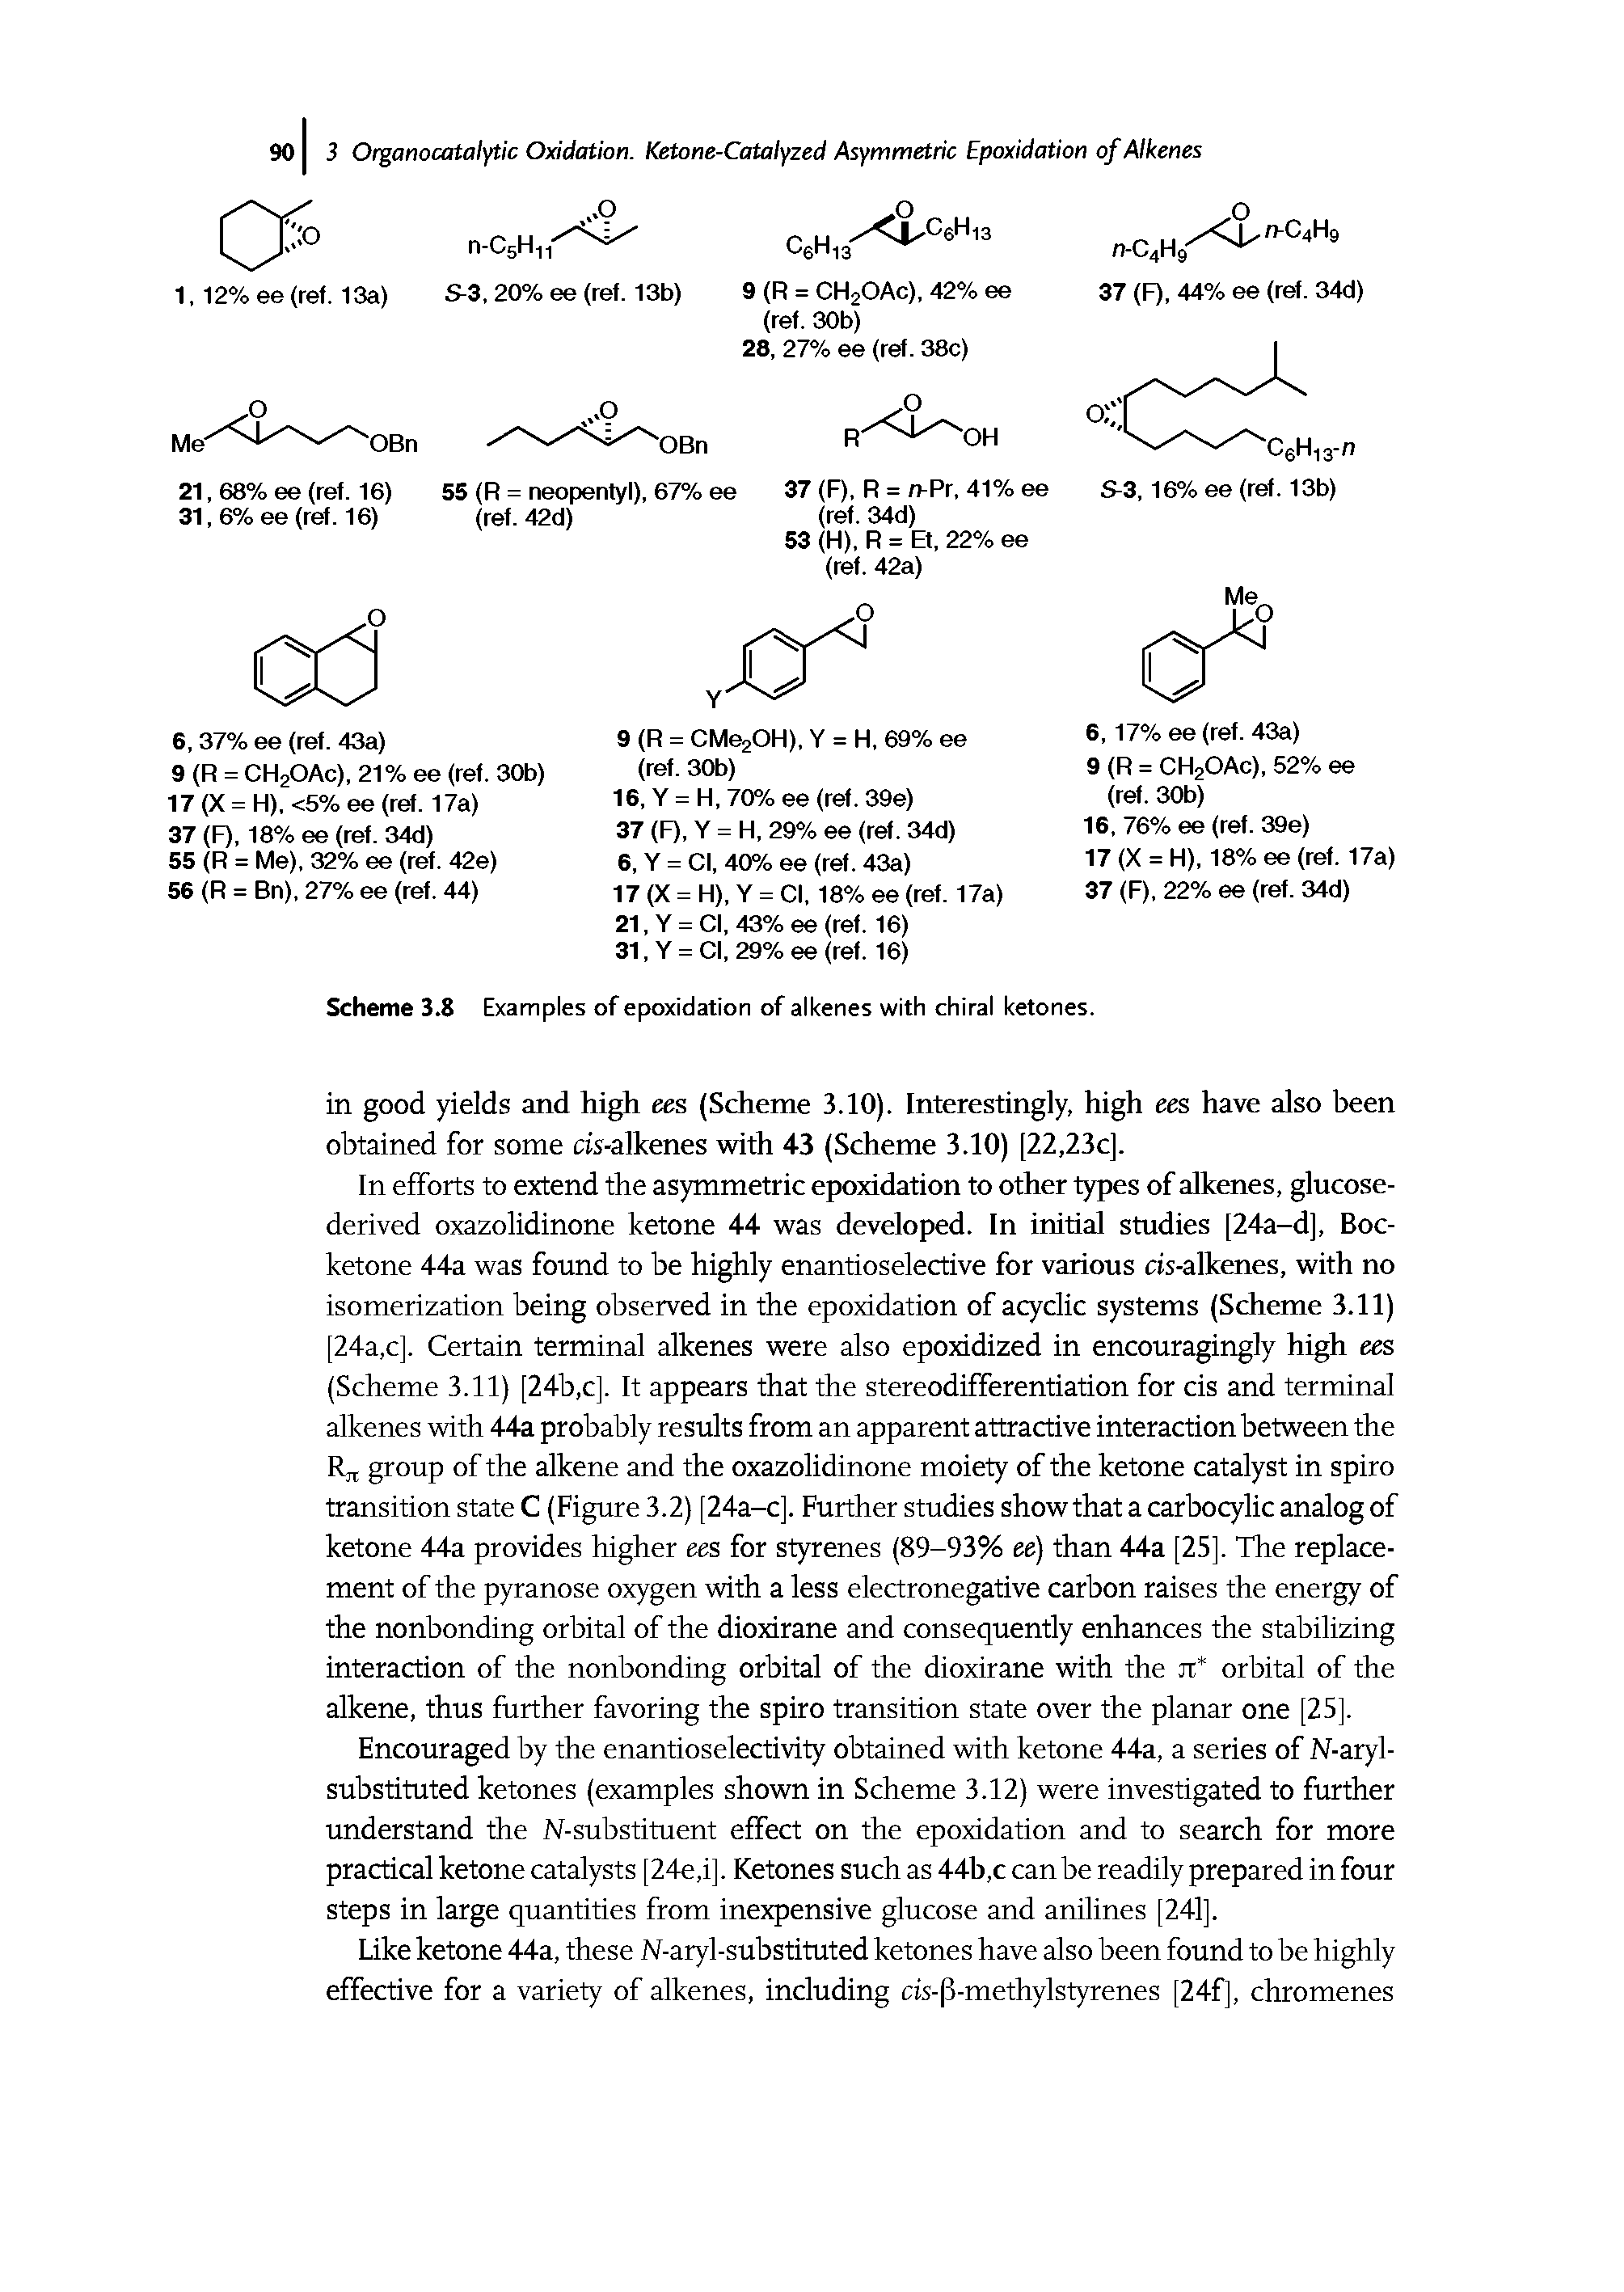 Scheme 3.8 Examples of epoxidation of alkenes with chiral ketones.